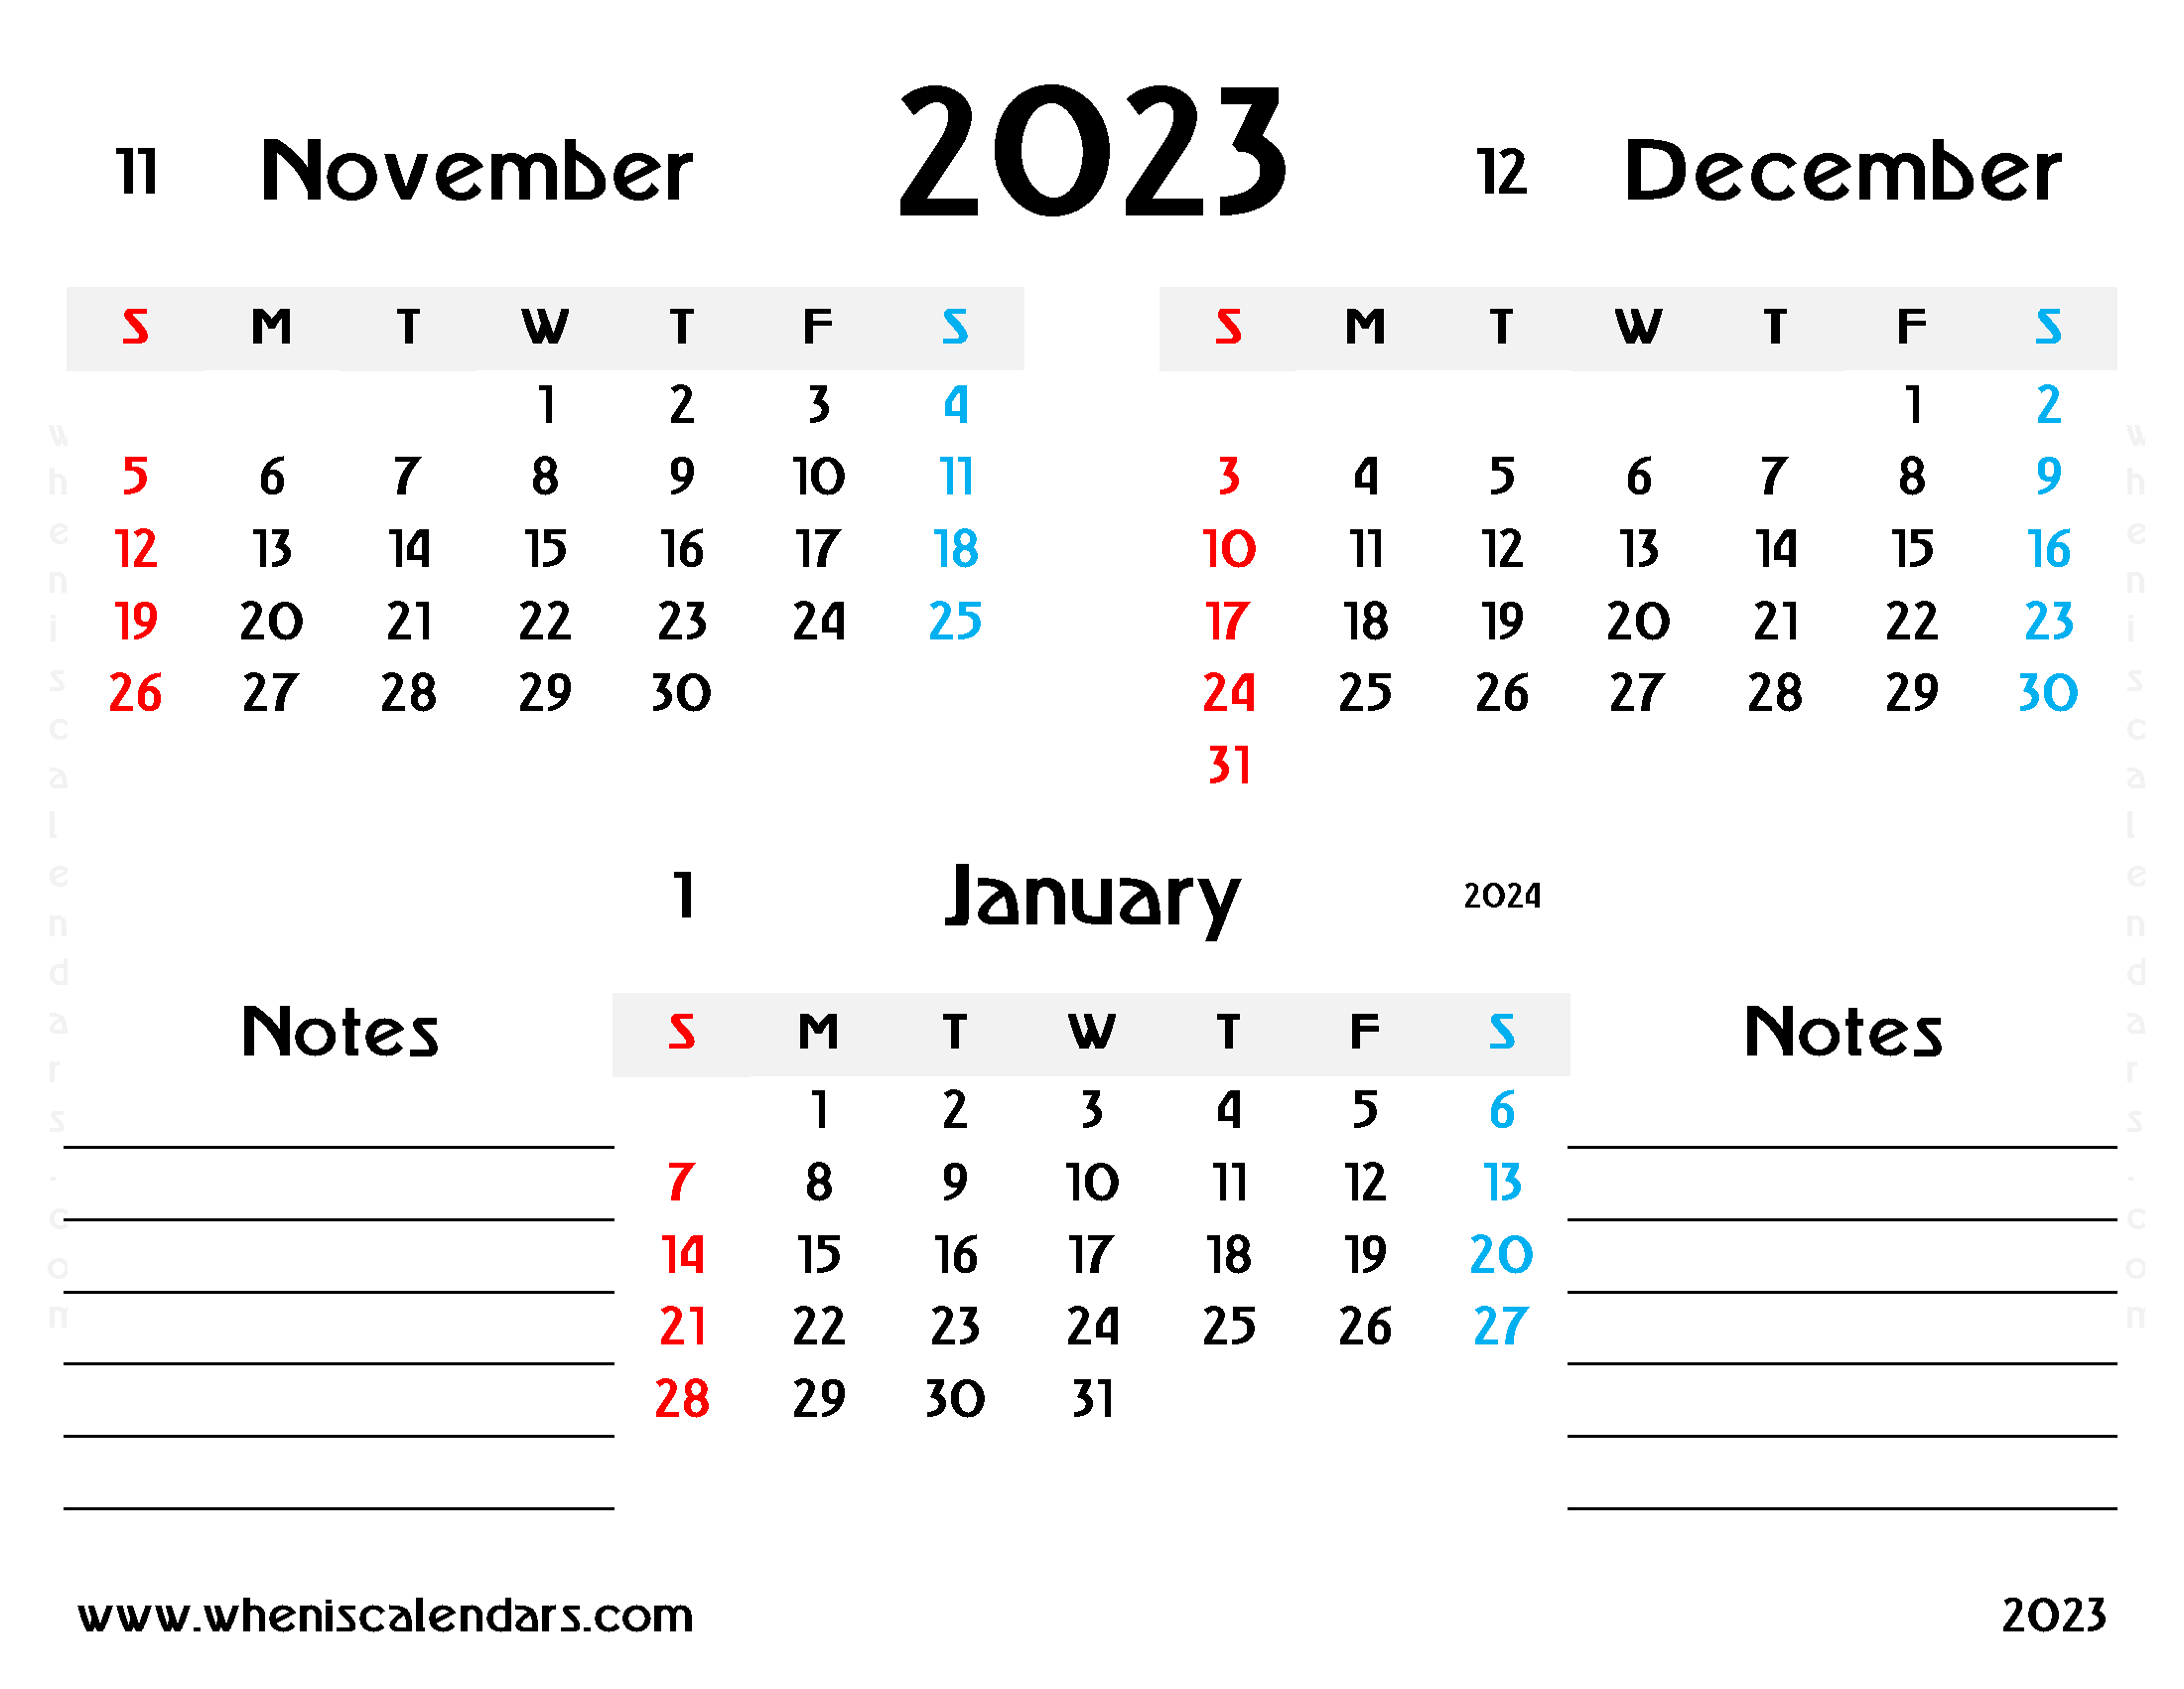 Dec 2023 / Jan 2024 2023